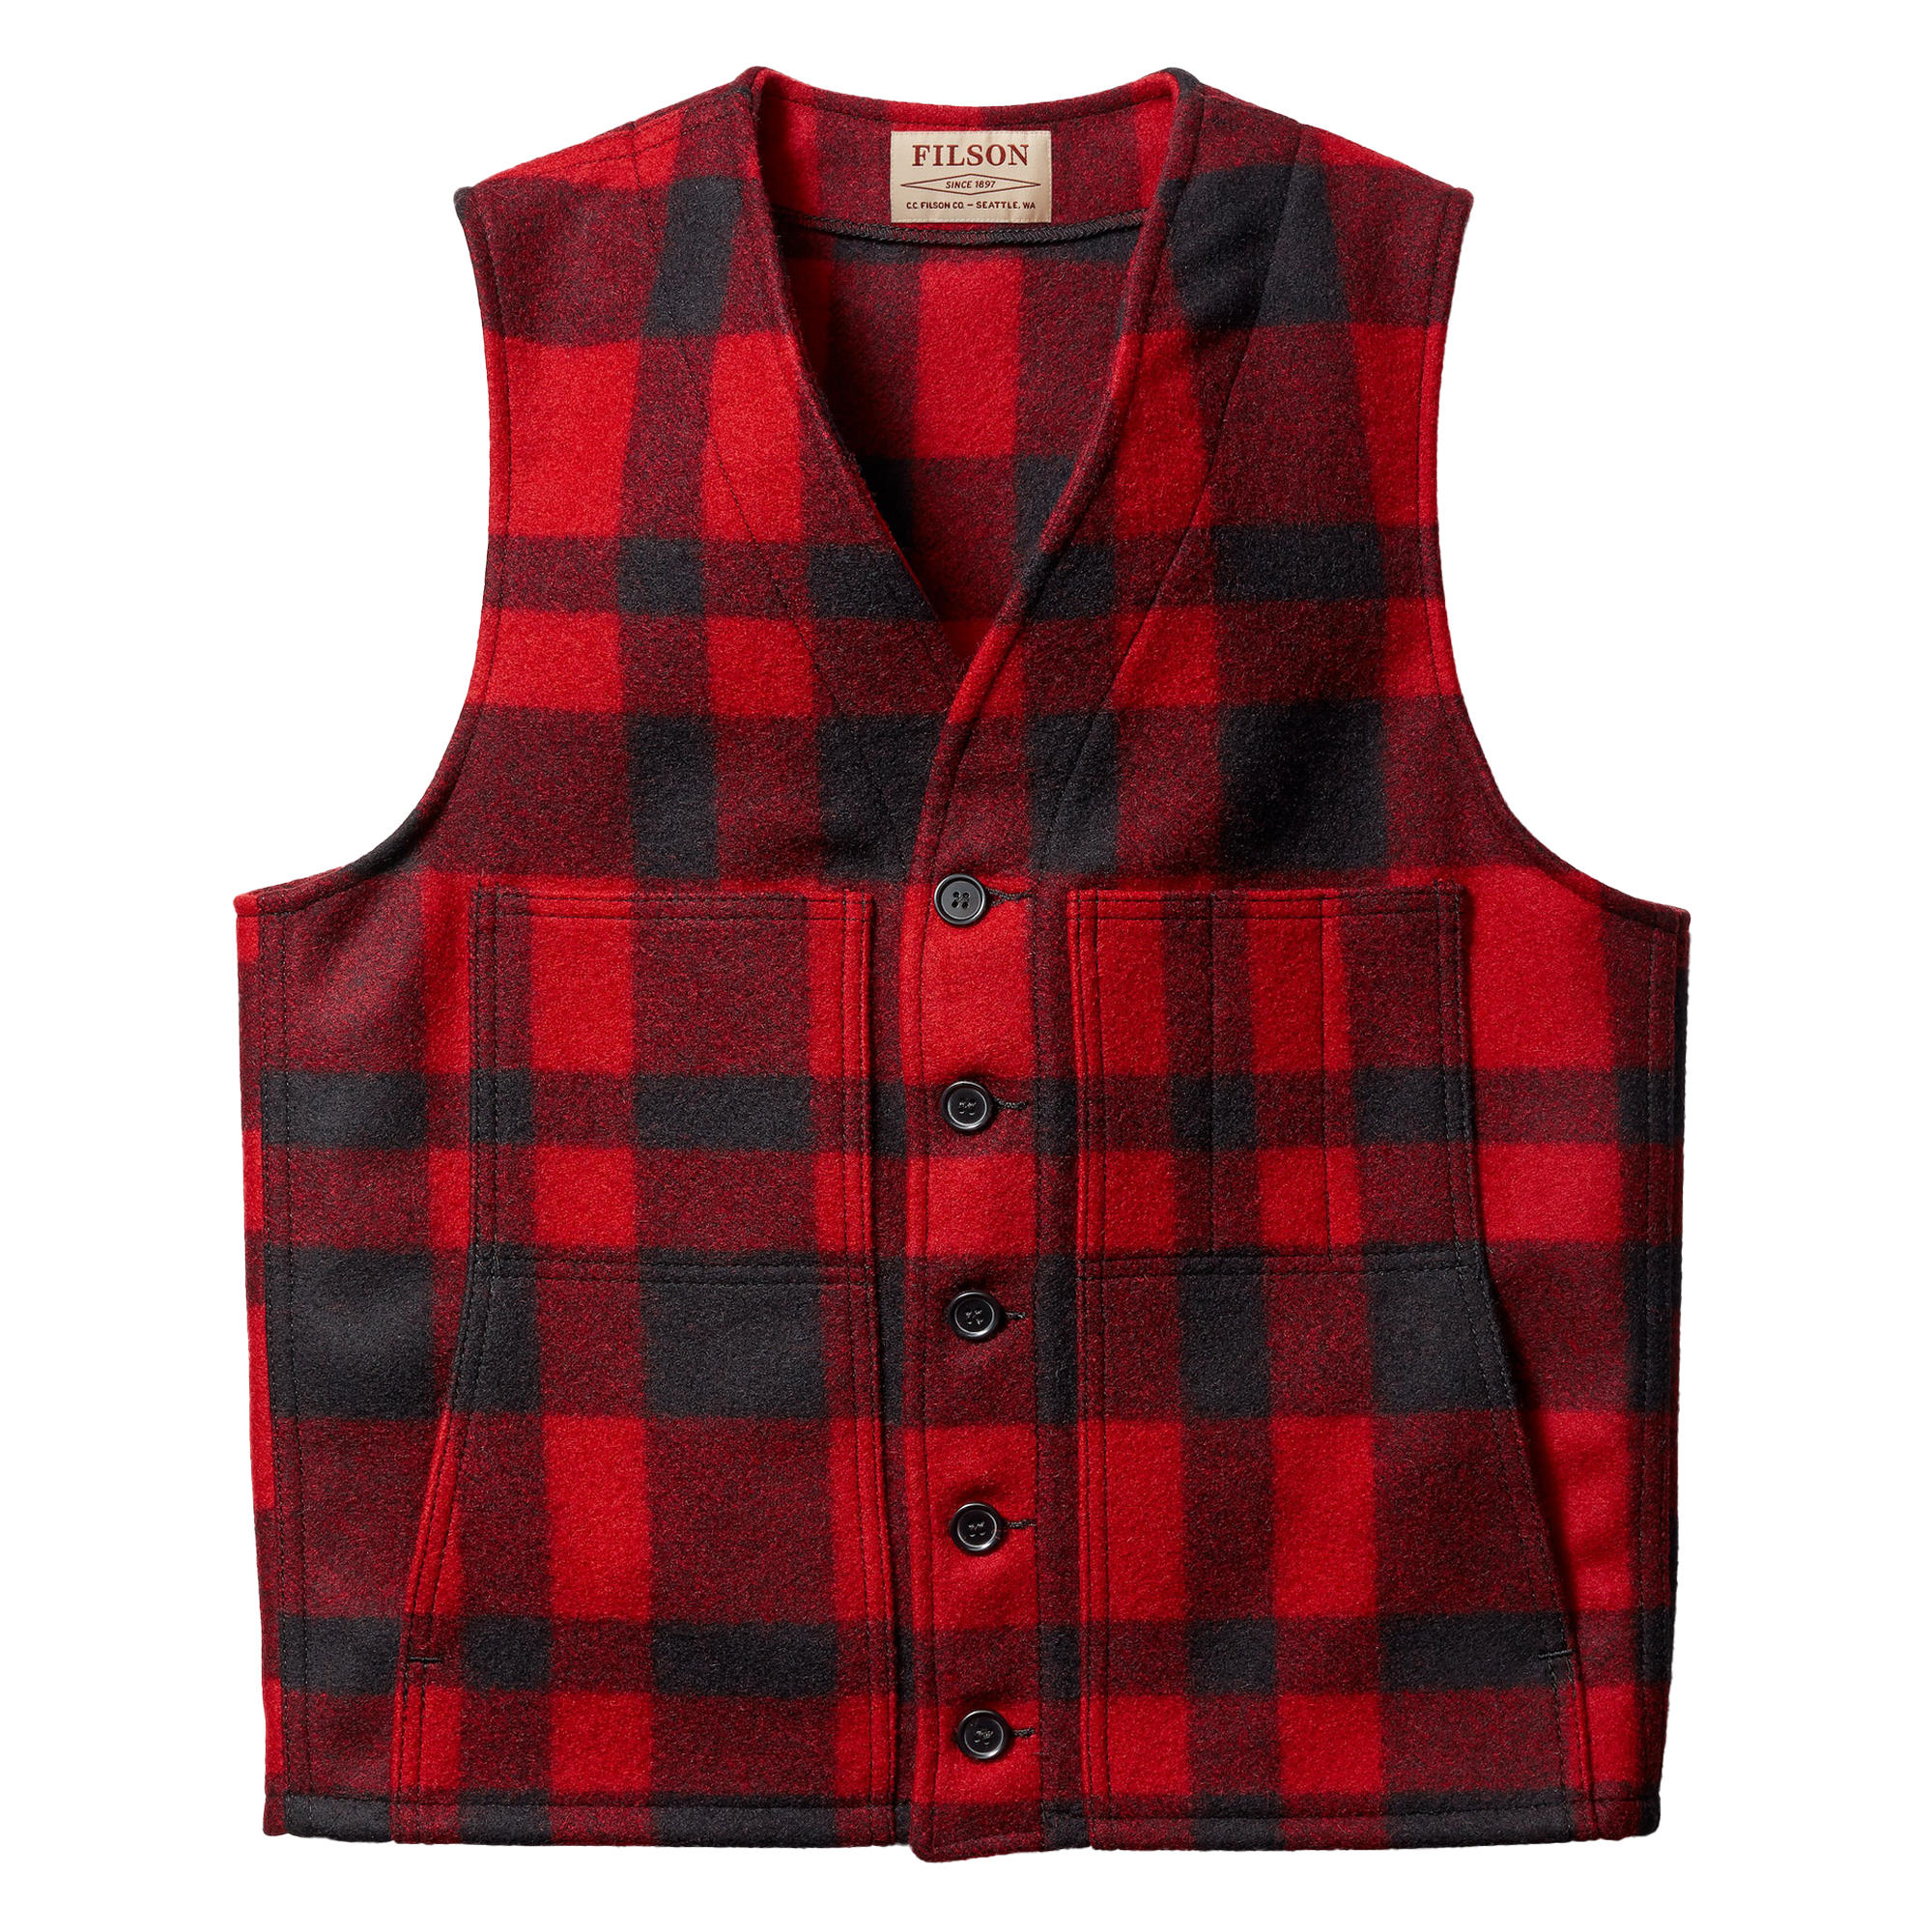 Filson Mackinaw Wool Vest, Red/Black Plaid, Size M, Vests